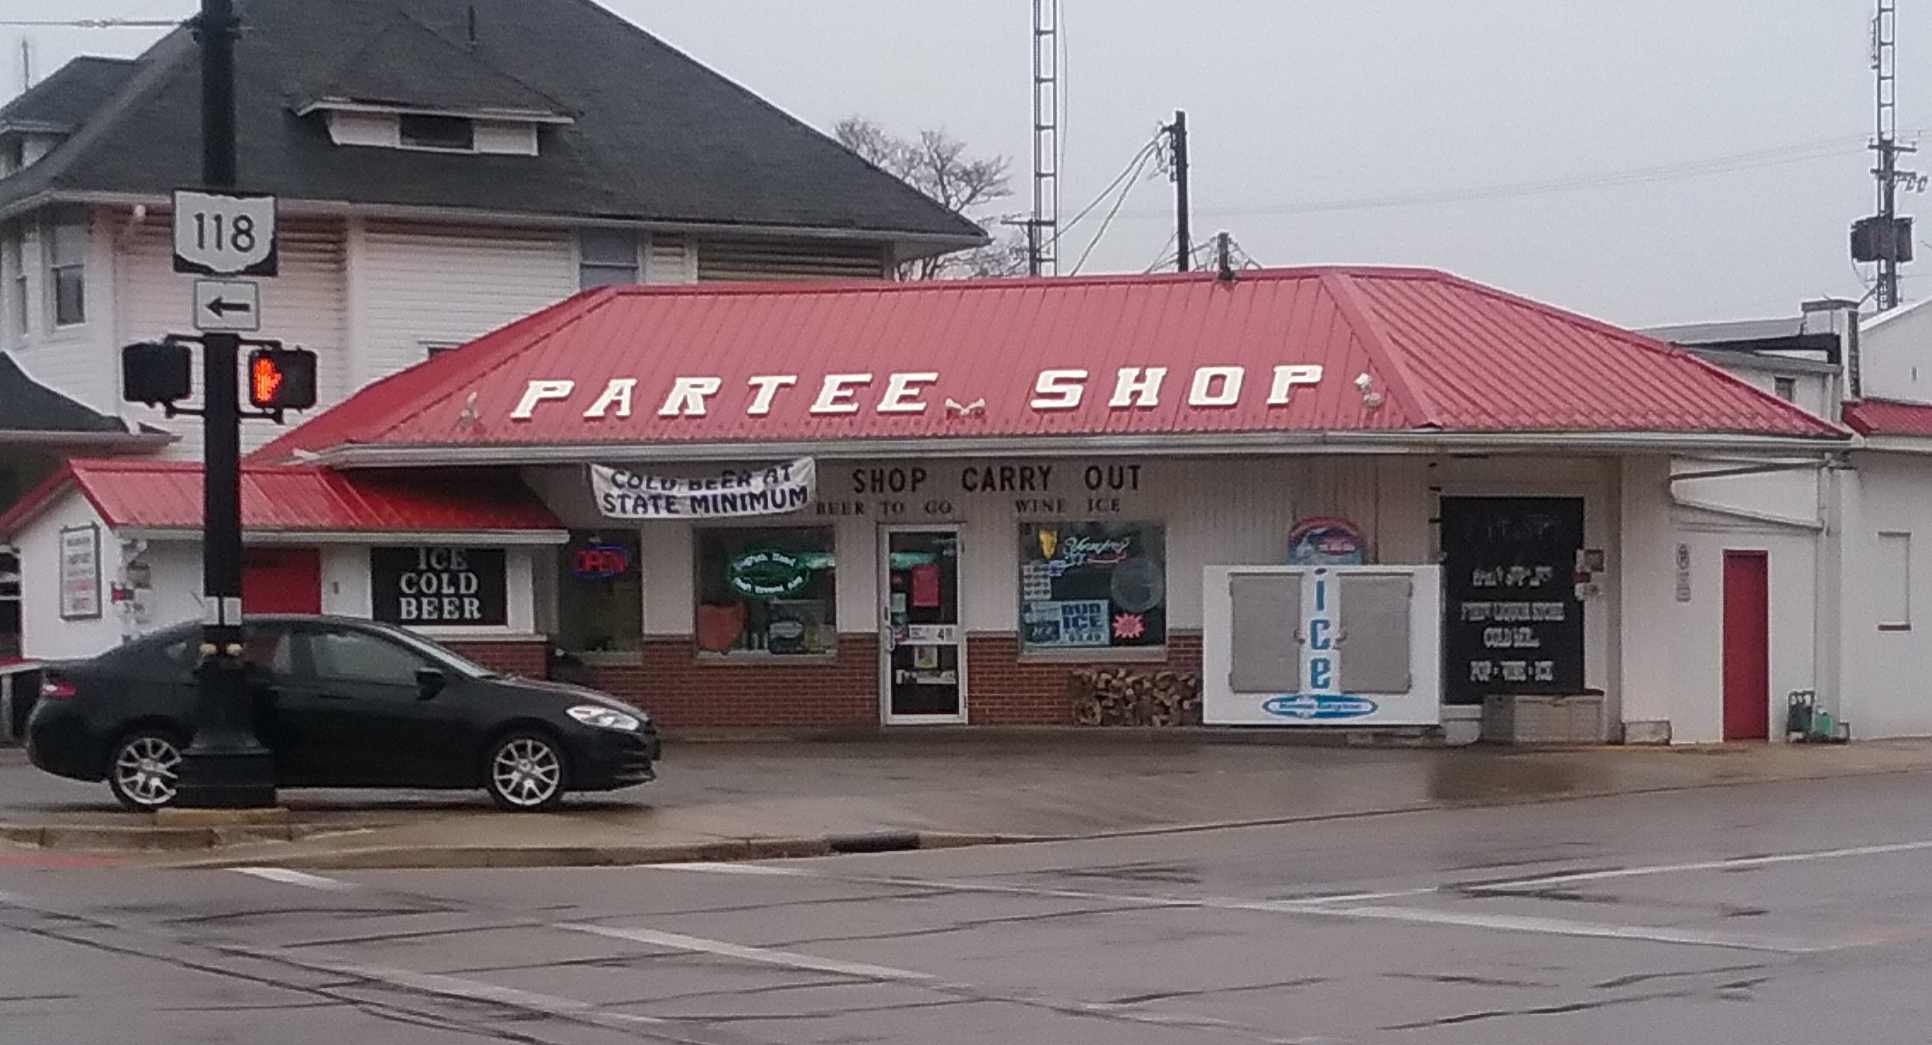 Partee Shop